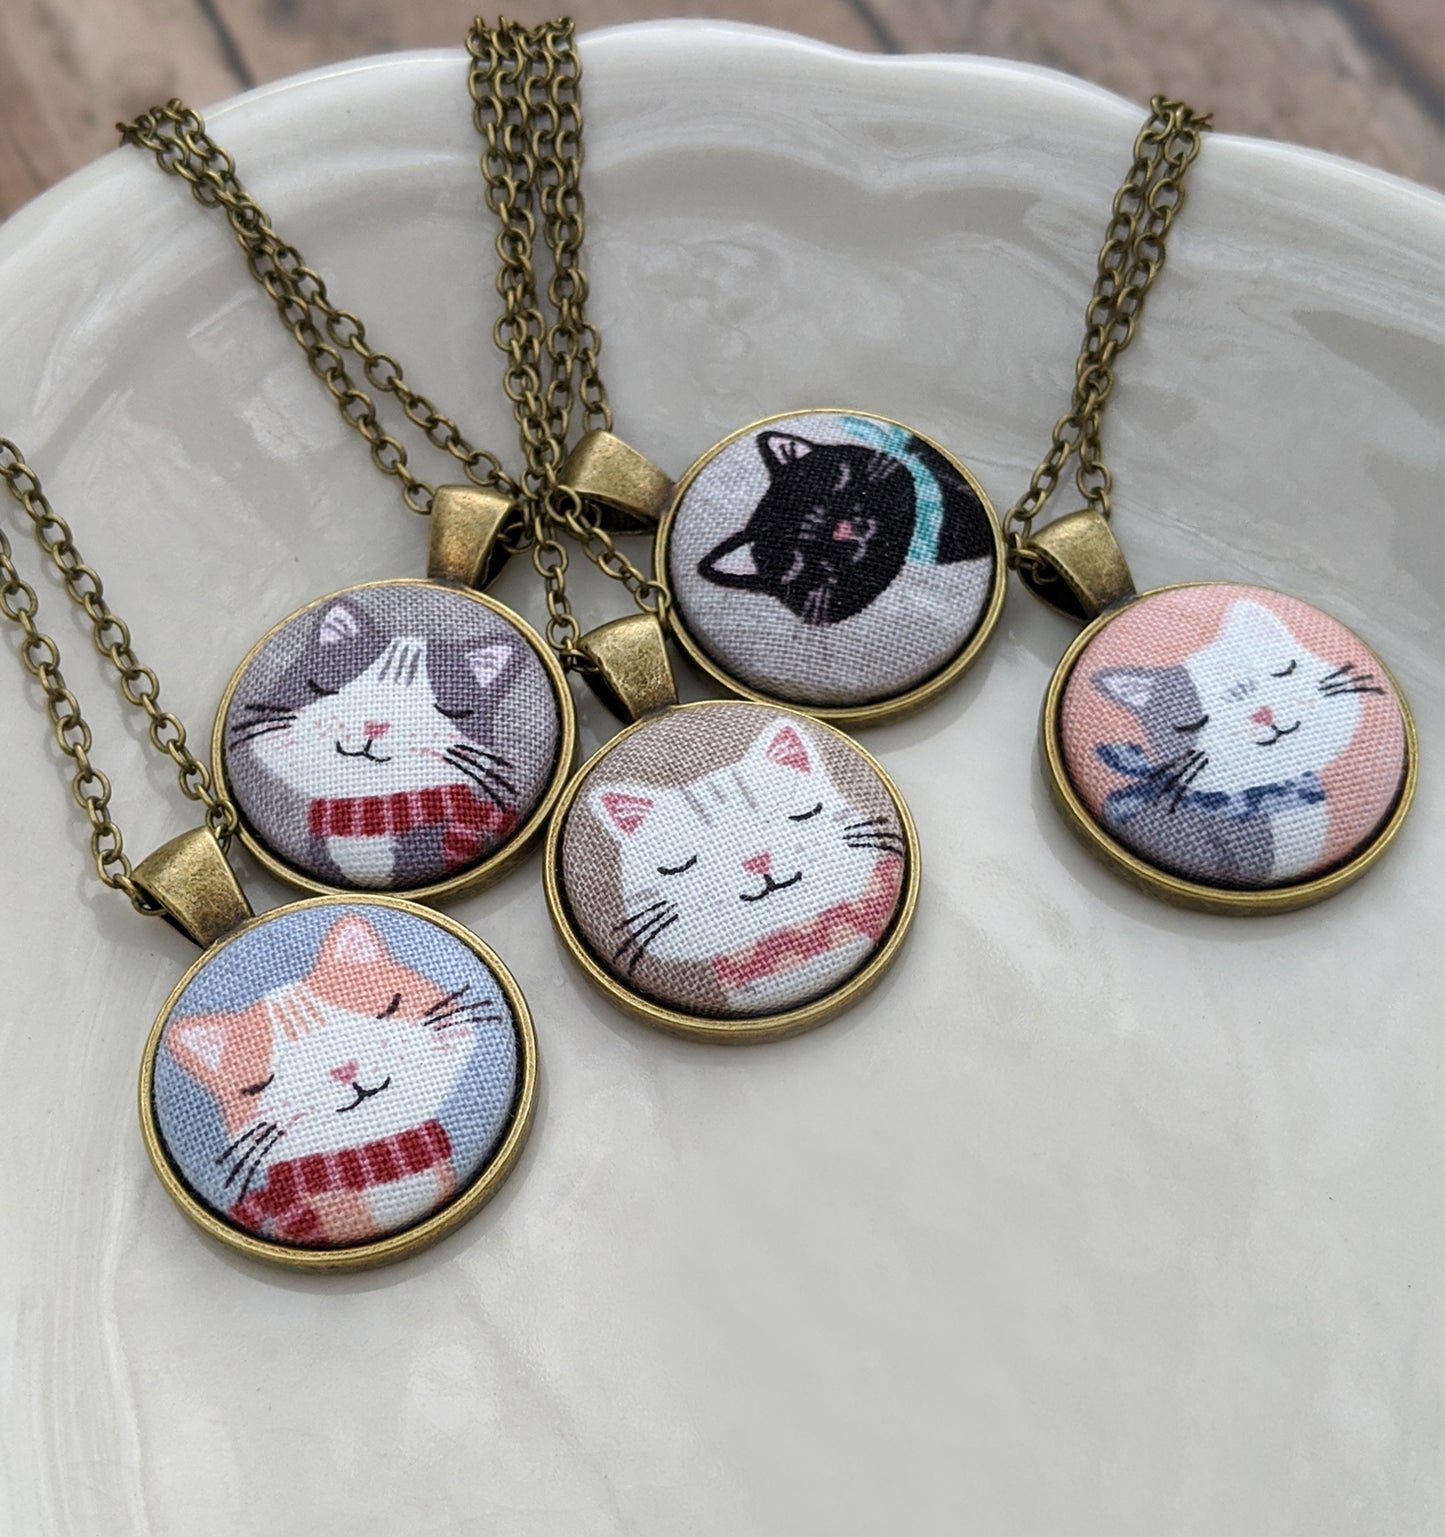 Cat Necklace - choose your favorite